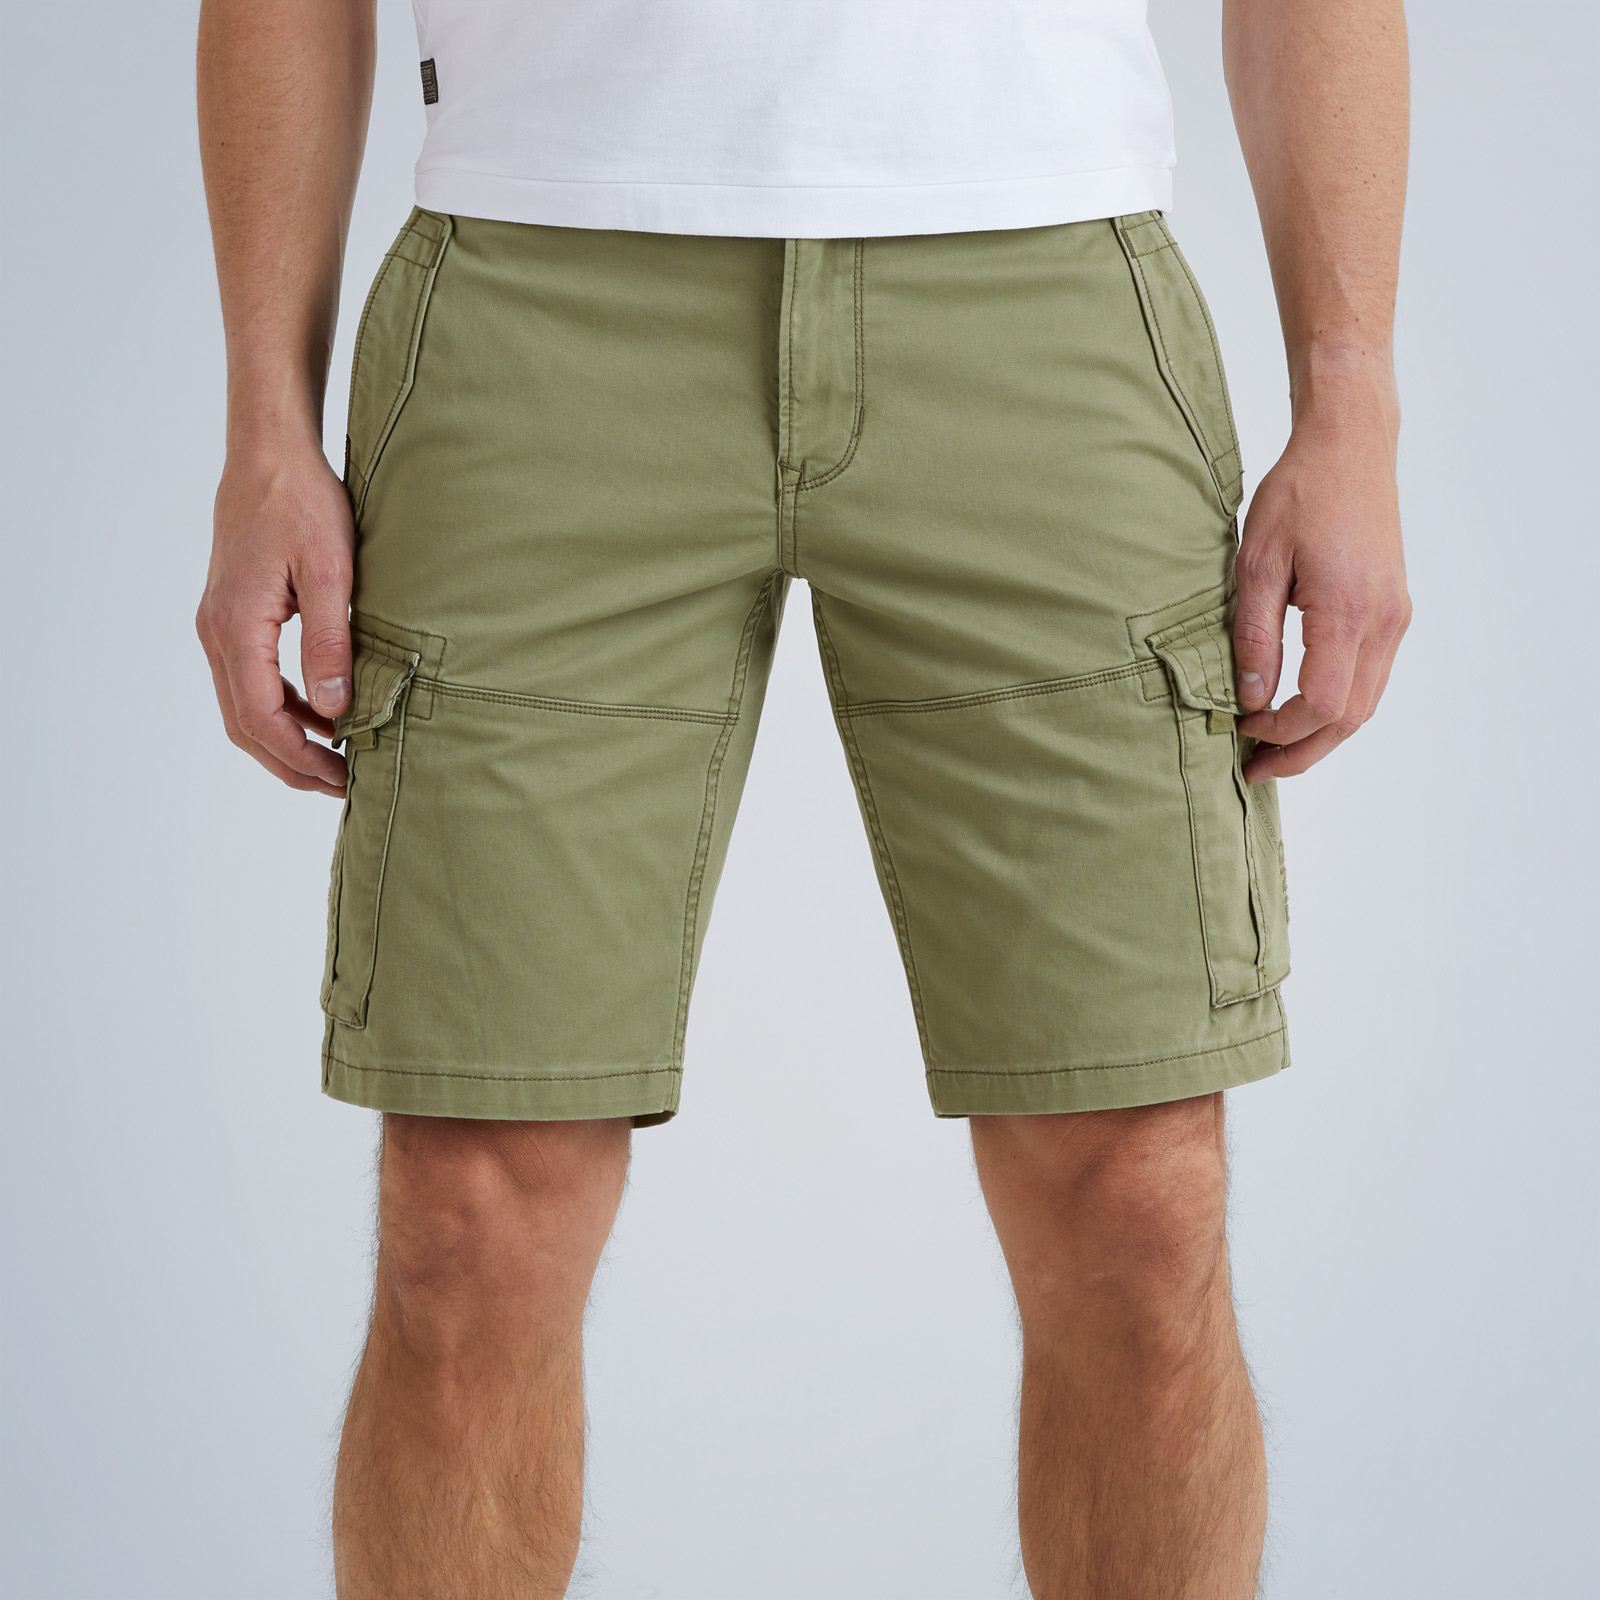 Reel Legends Convertible cargo pants shorts combo men sz 30-L khaki tan  Beige